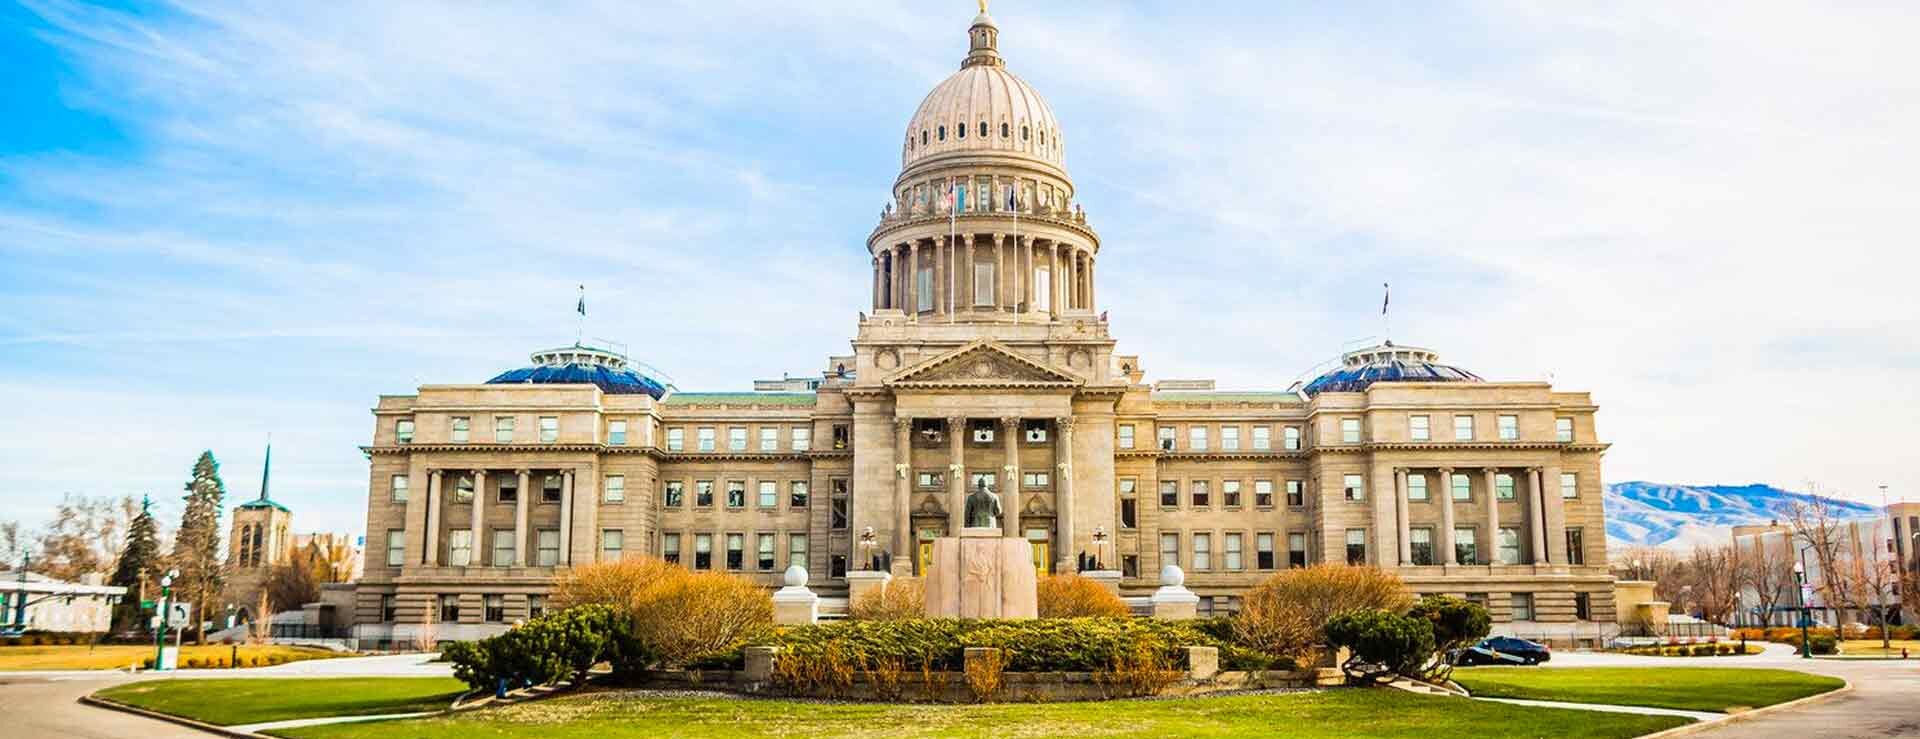 Idaho state capital building